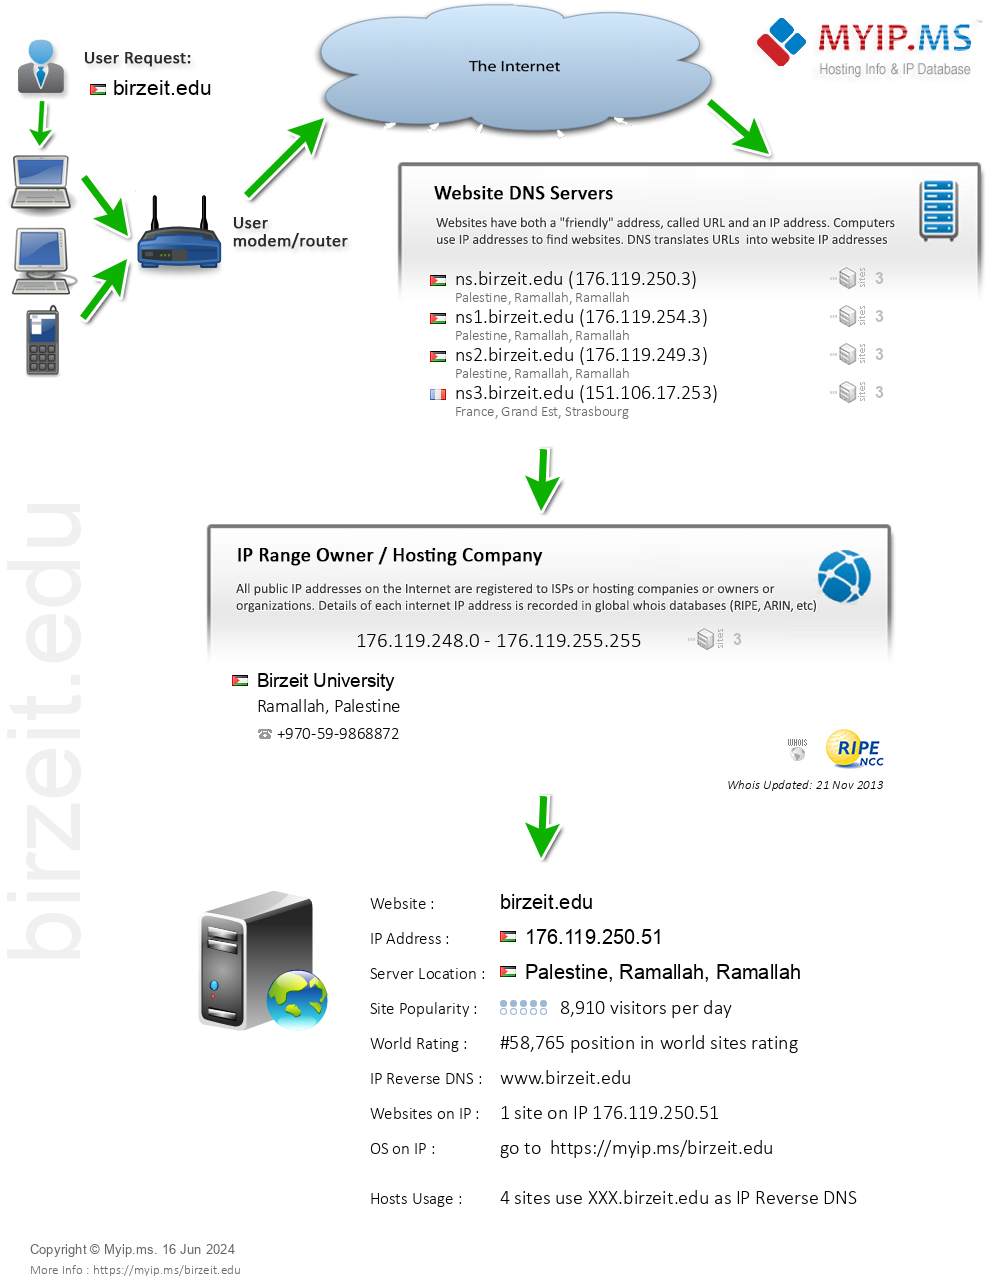 Birzeit.edu - Website Hosting Visual IP Diagram